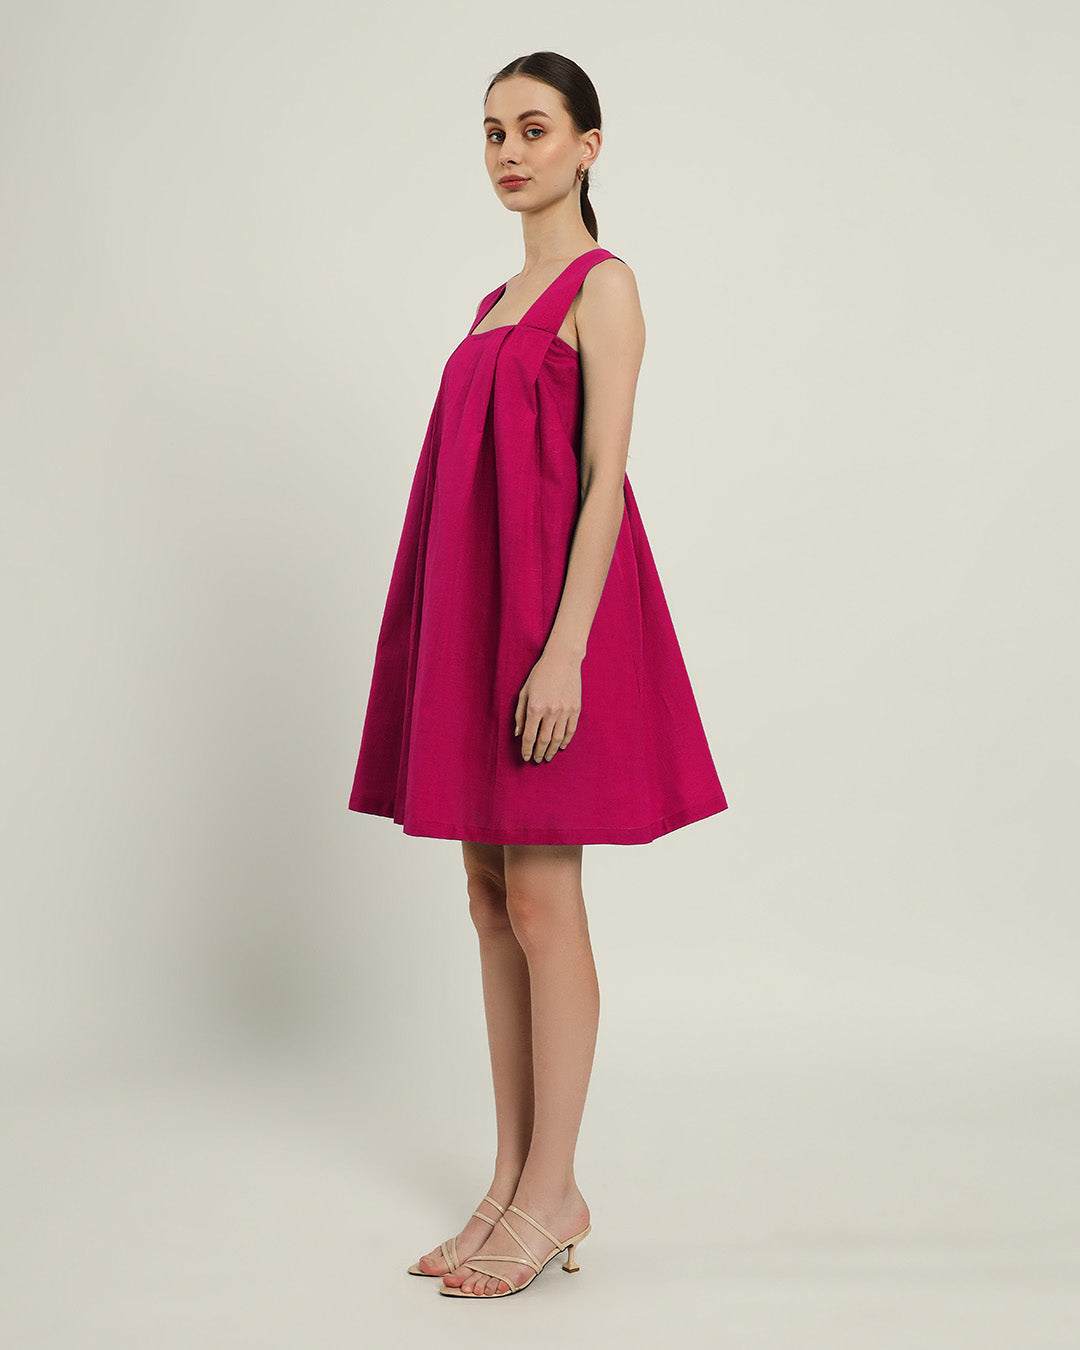 The Larissa Berry Cotton Dress